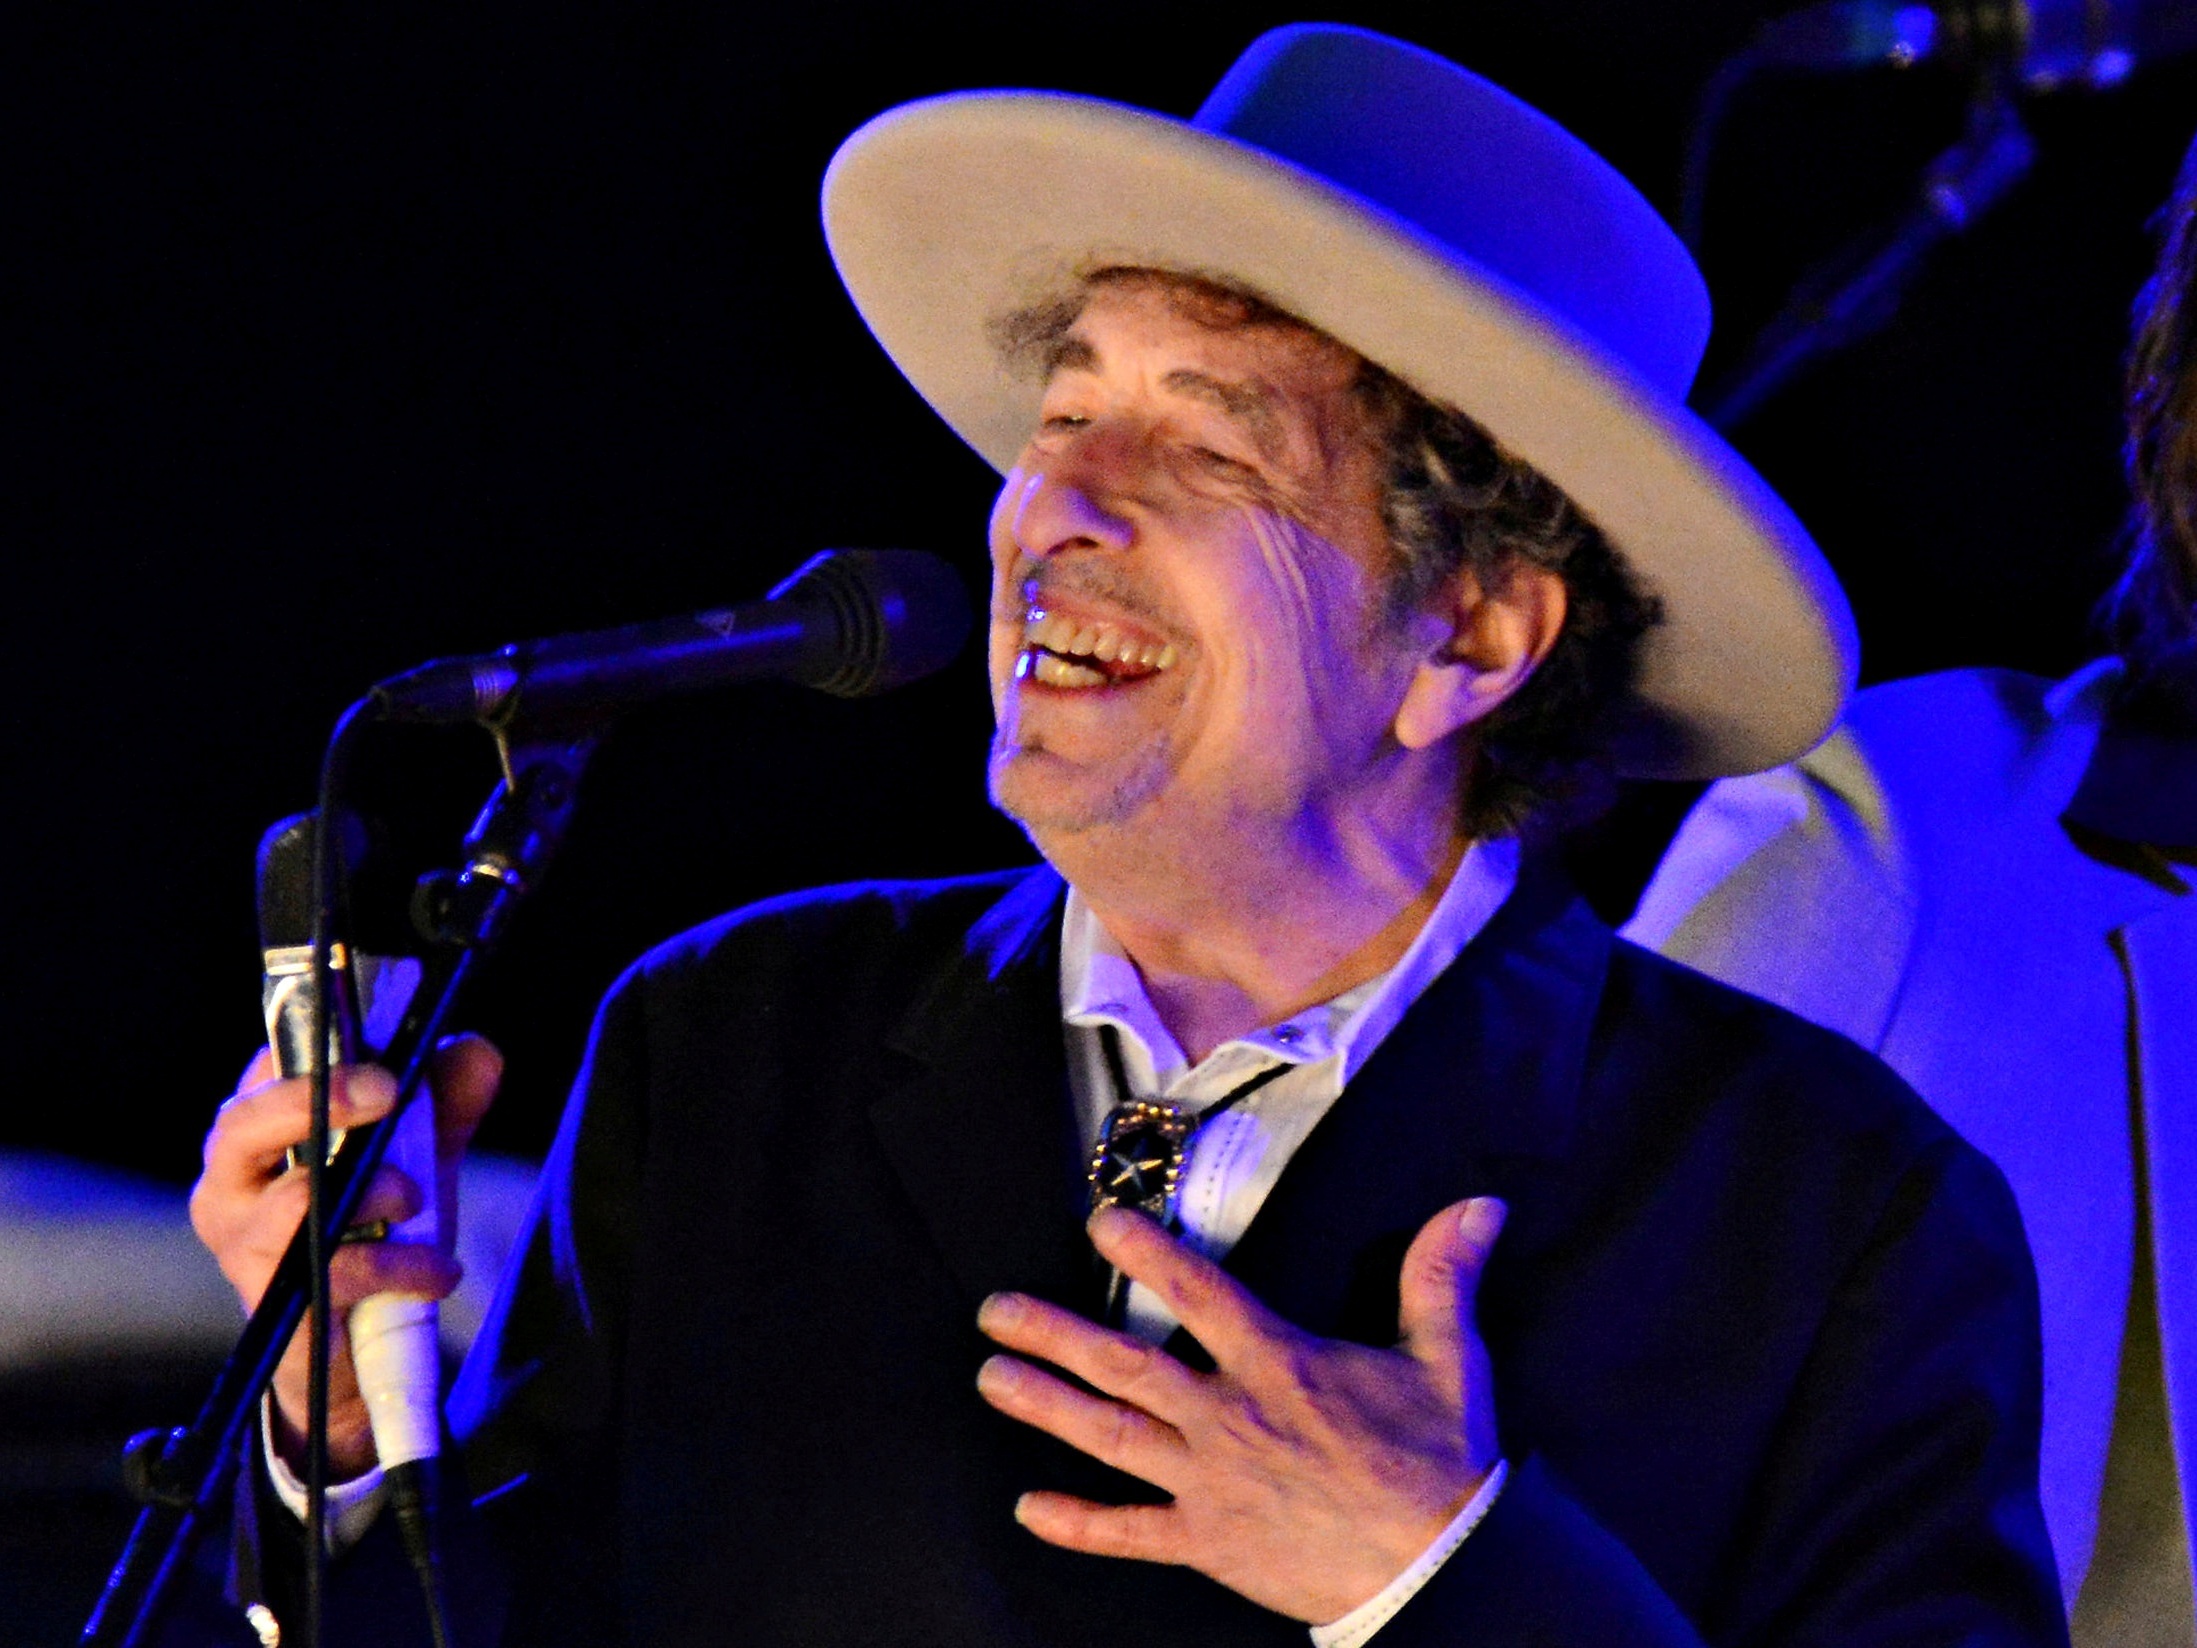 Jornal australiano diz que Bob Dylan morreu, mas o cantor está vivo